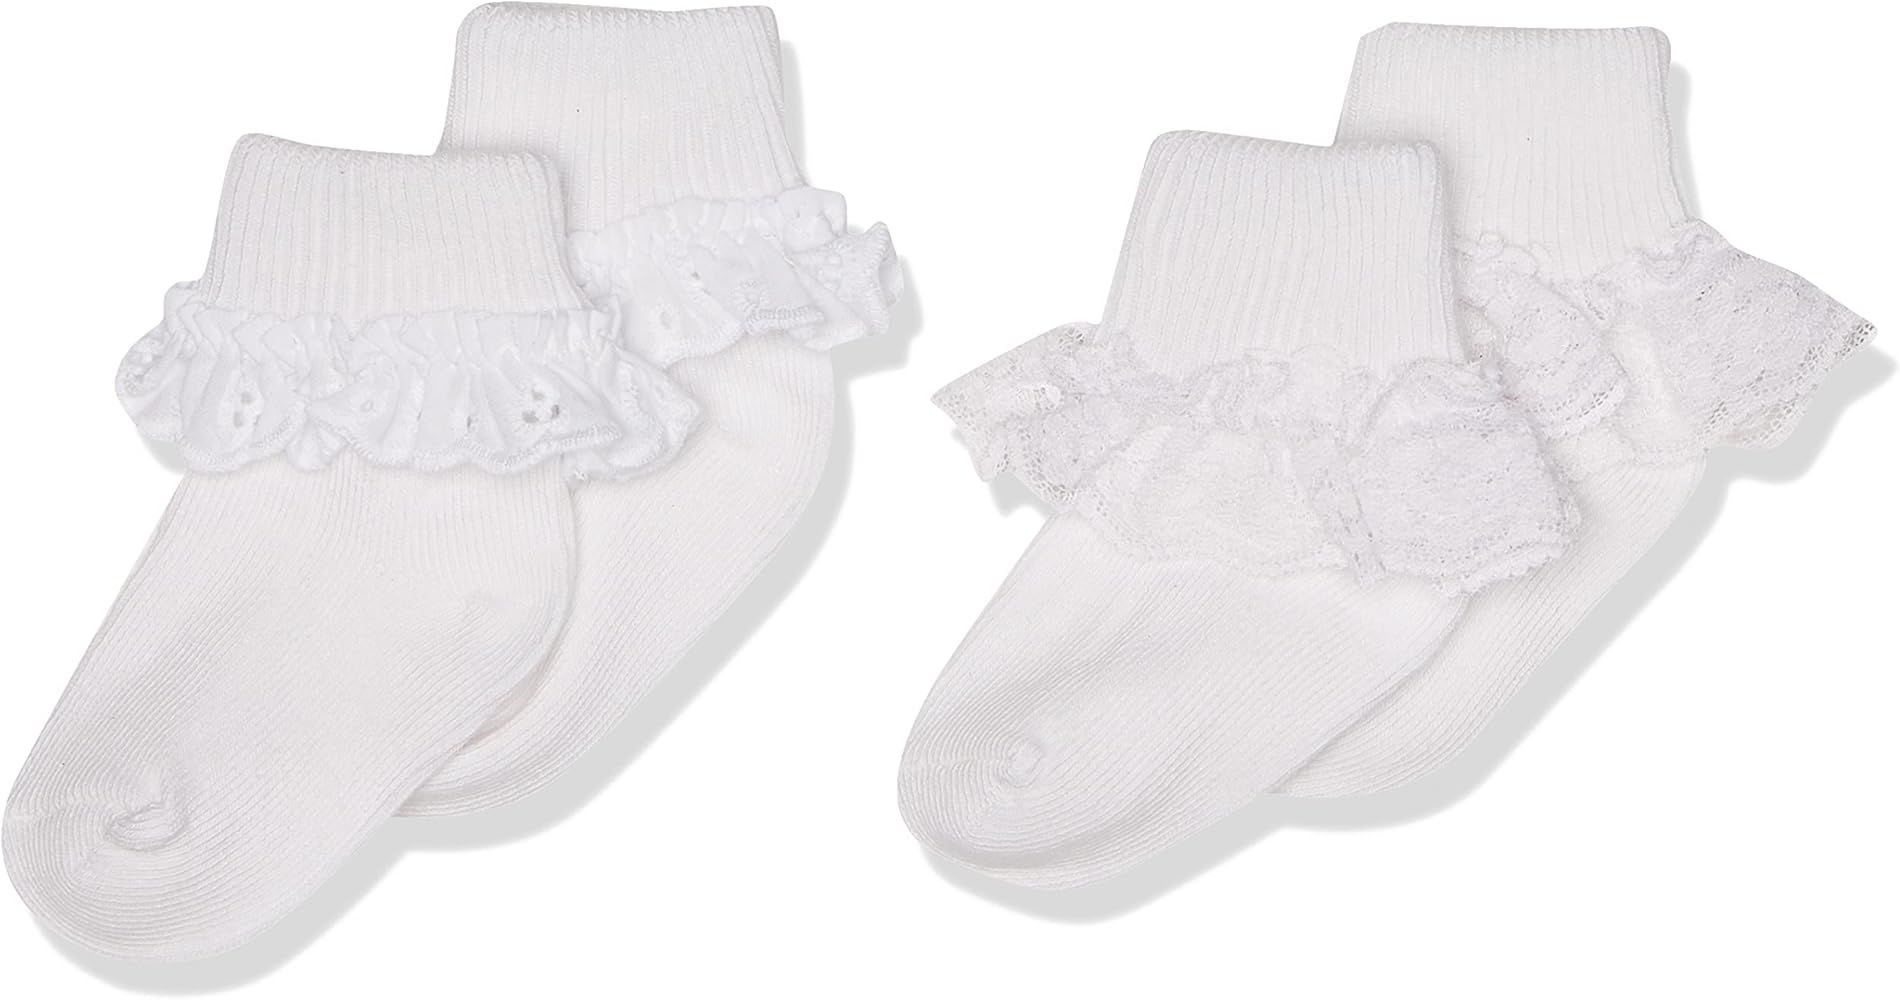 Jefferies Socks 2 Pack Eyelet Lace Trim And Lace Trim Sock - White/White | Amazon (US)